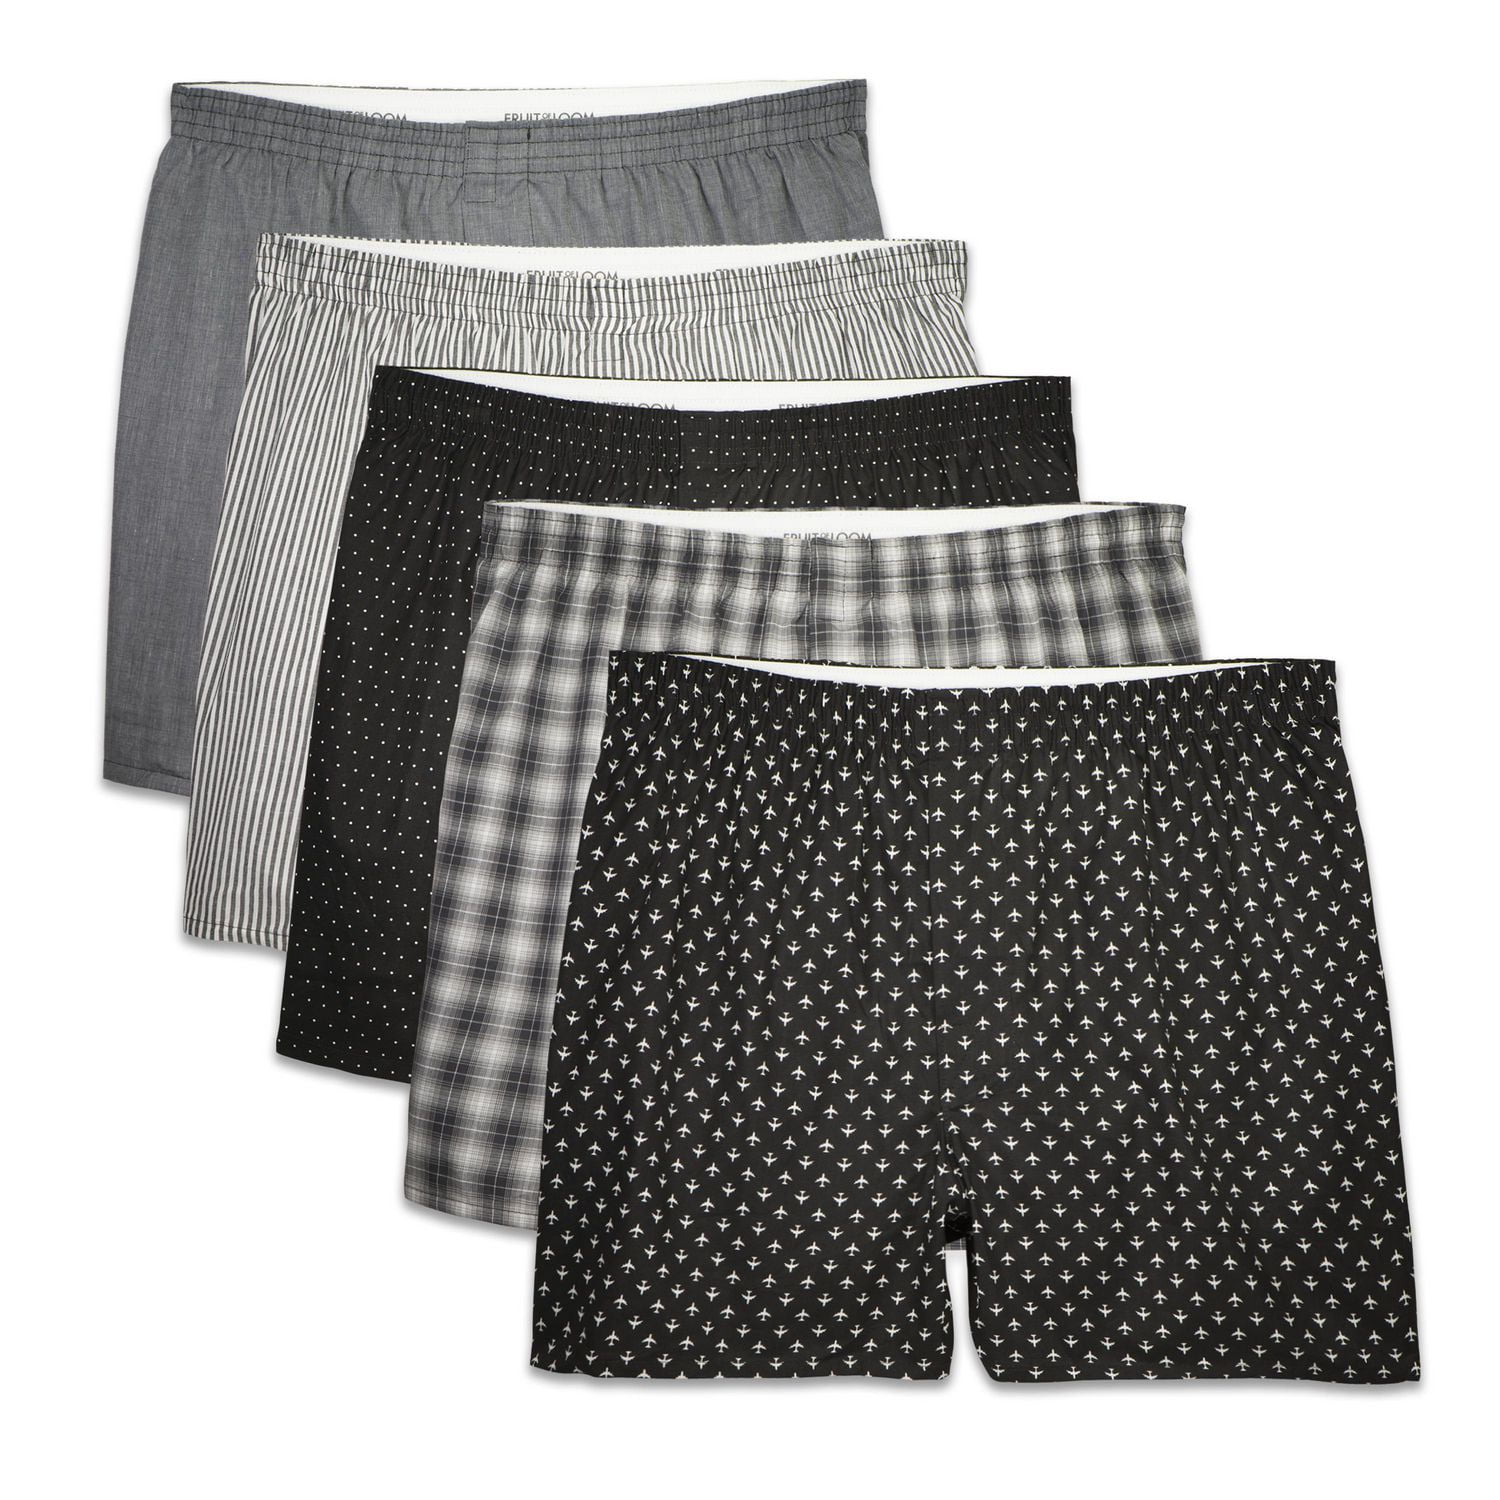 Fruit of the Loom Men's Prints & Stripes Boxer Shorts, 5-Pack 